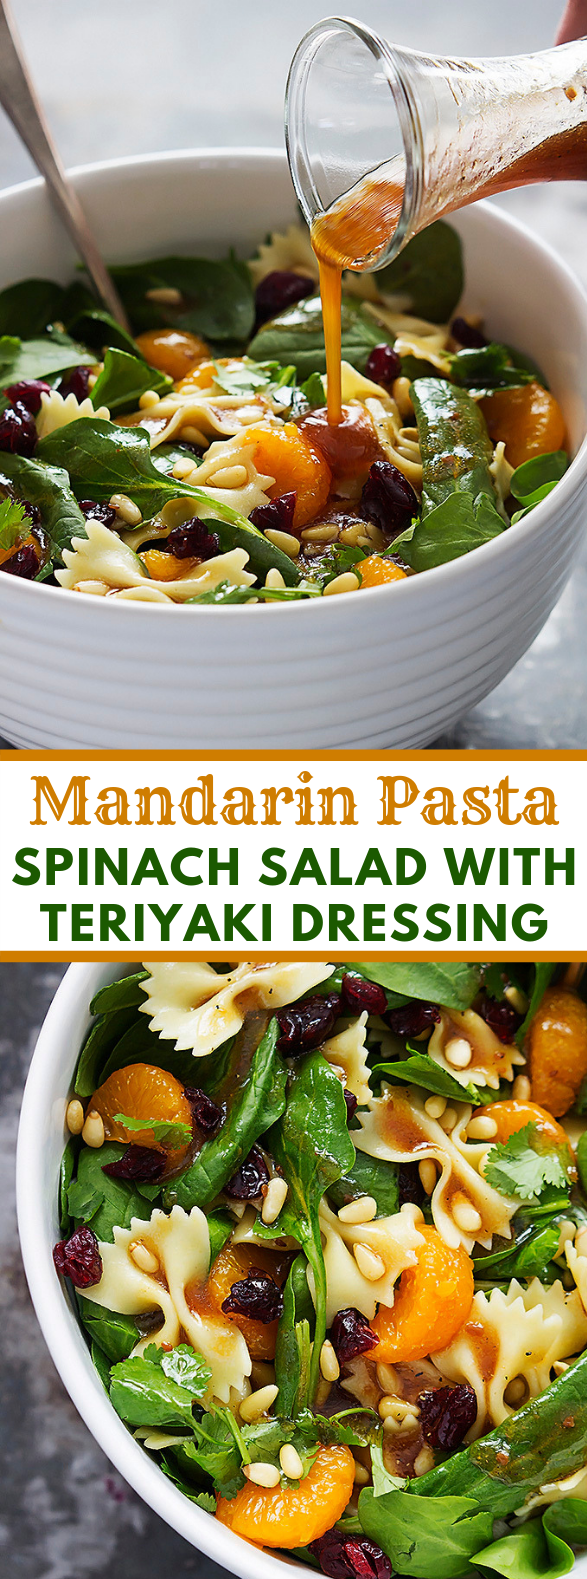 MANDARIN PASTA SPINACH SALAD WITH TERIYAKI DRESSING #vegetarian #healthy